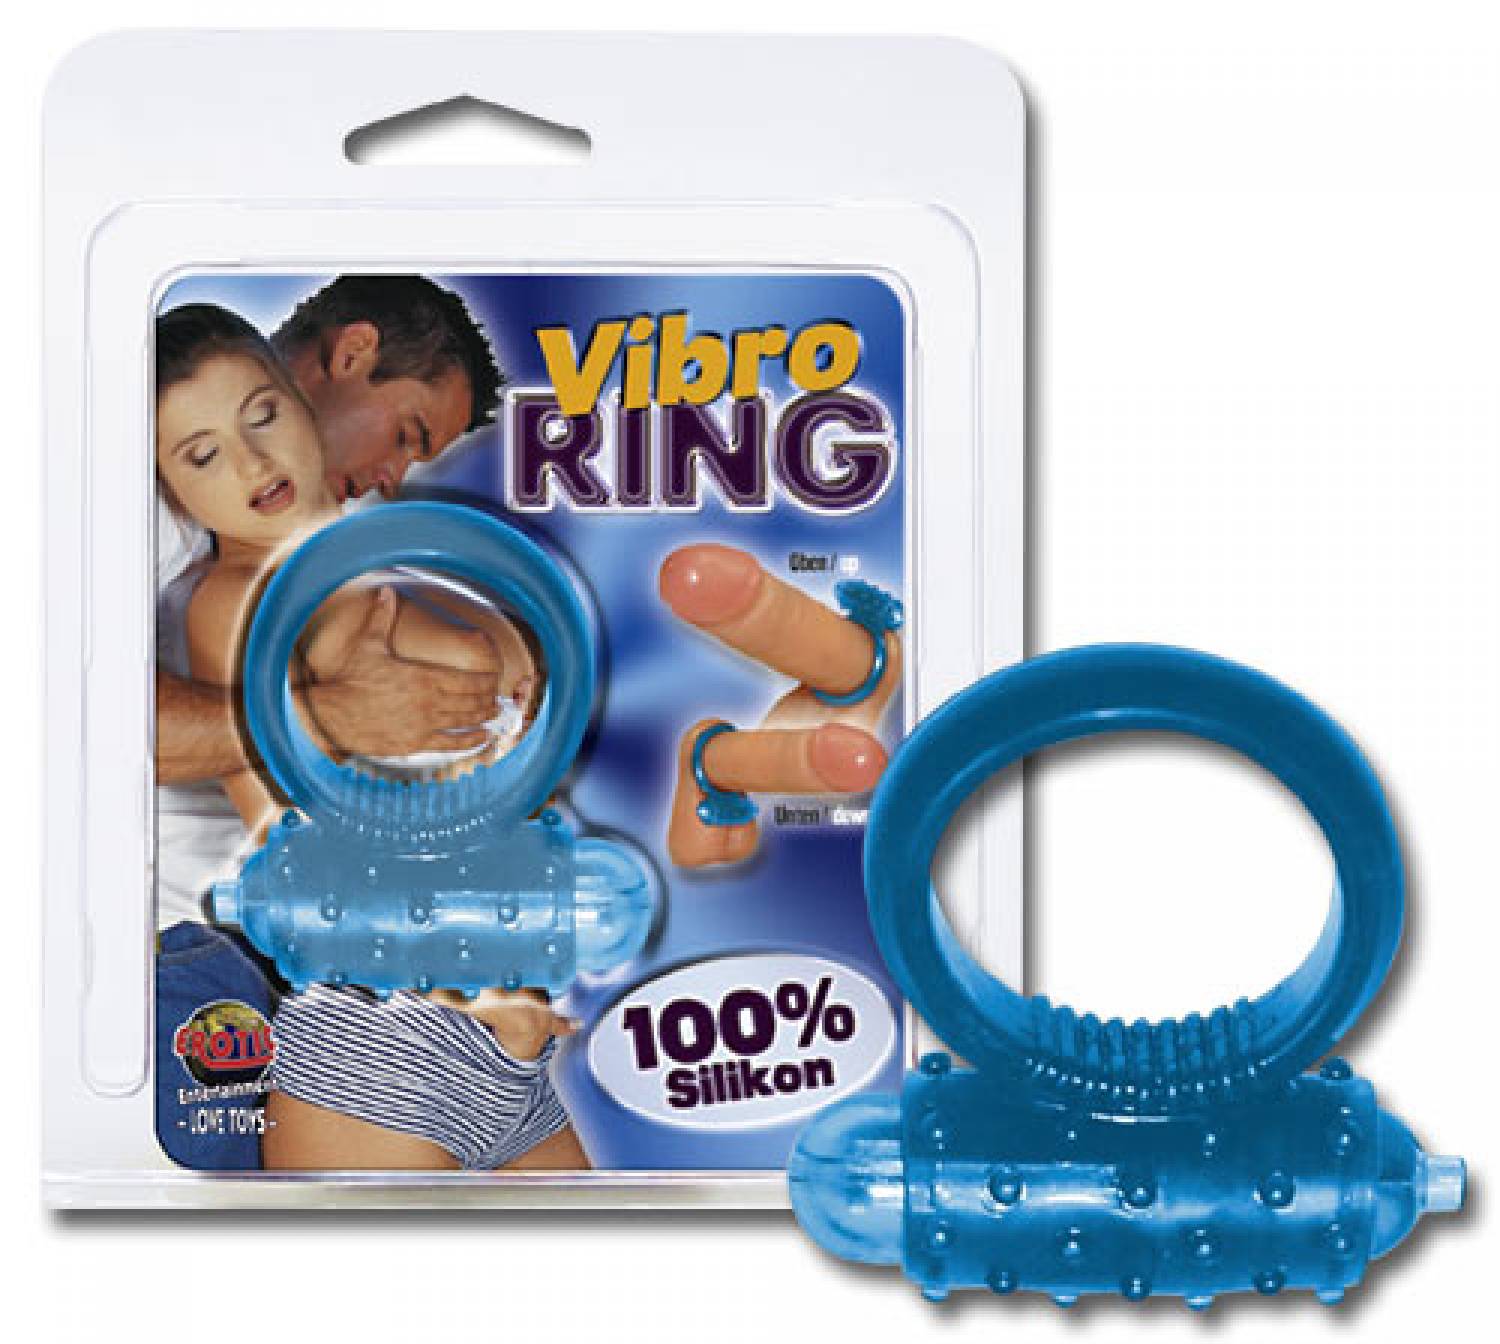 Erotic Entertainment Love Toys Vibro Penis Ring